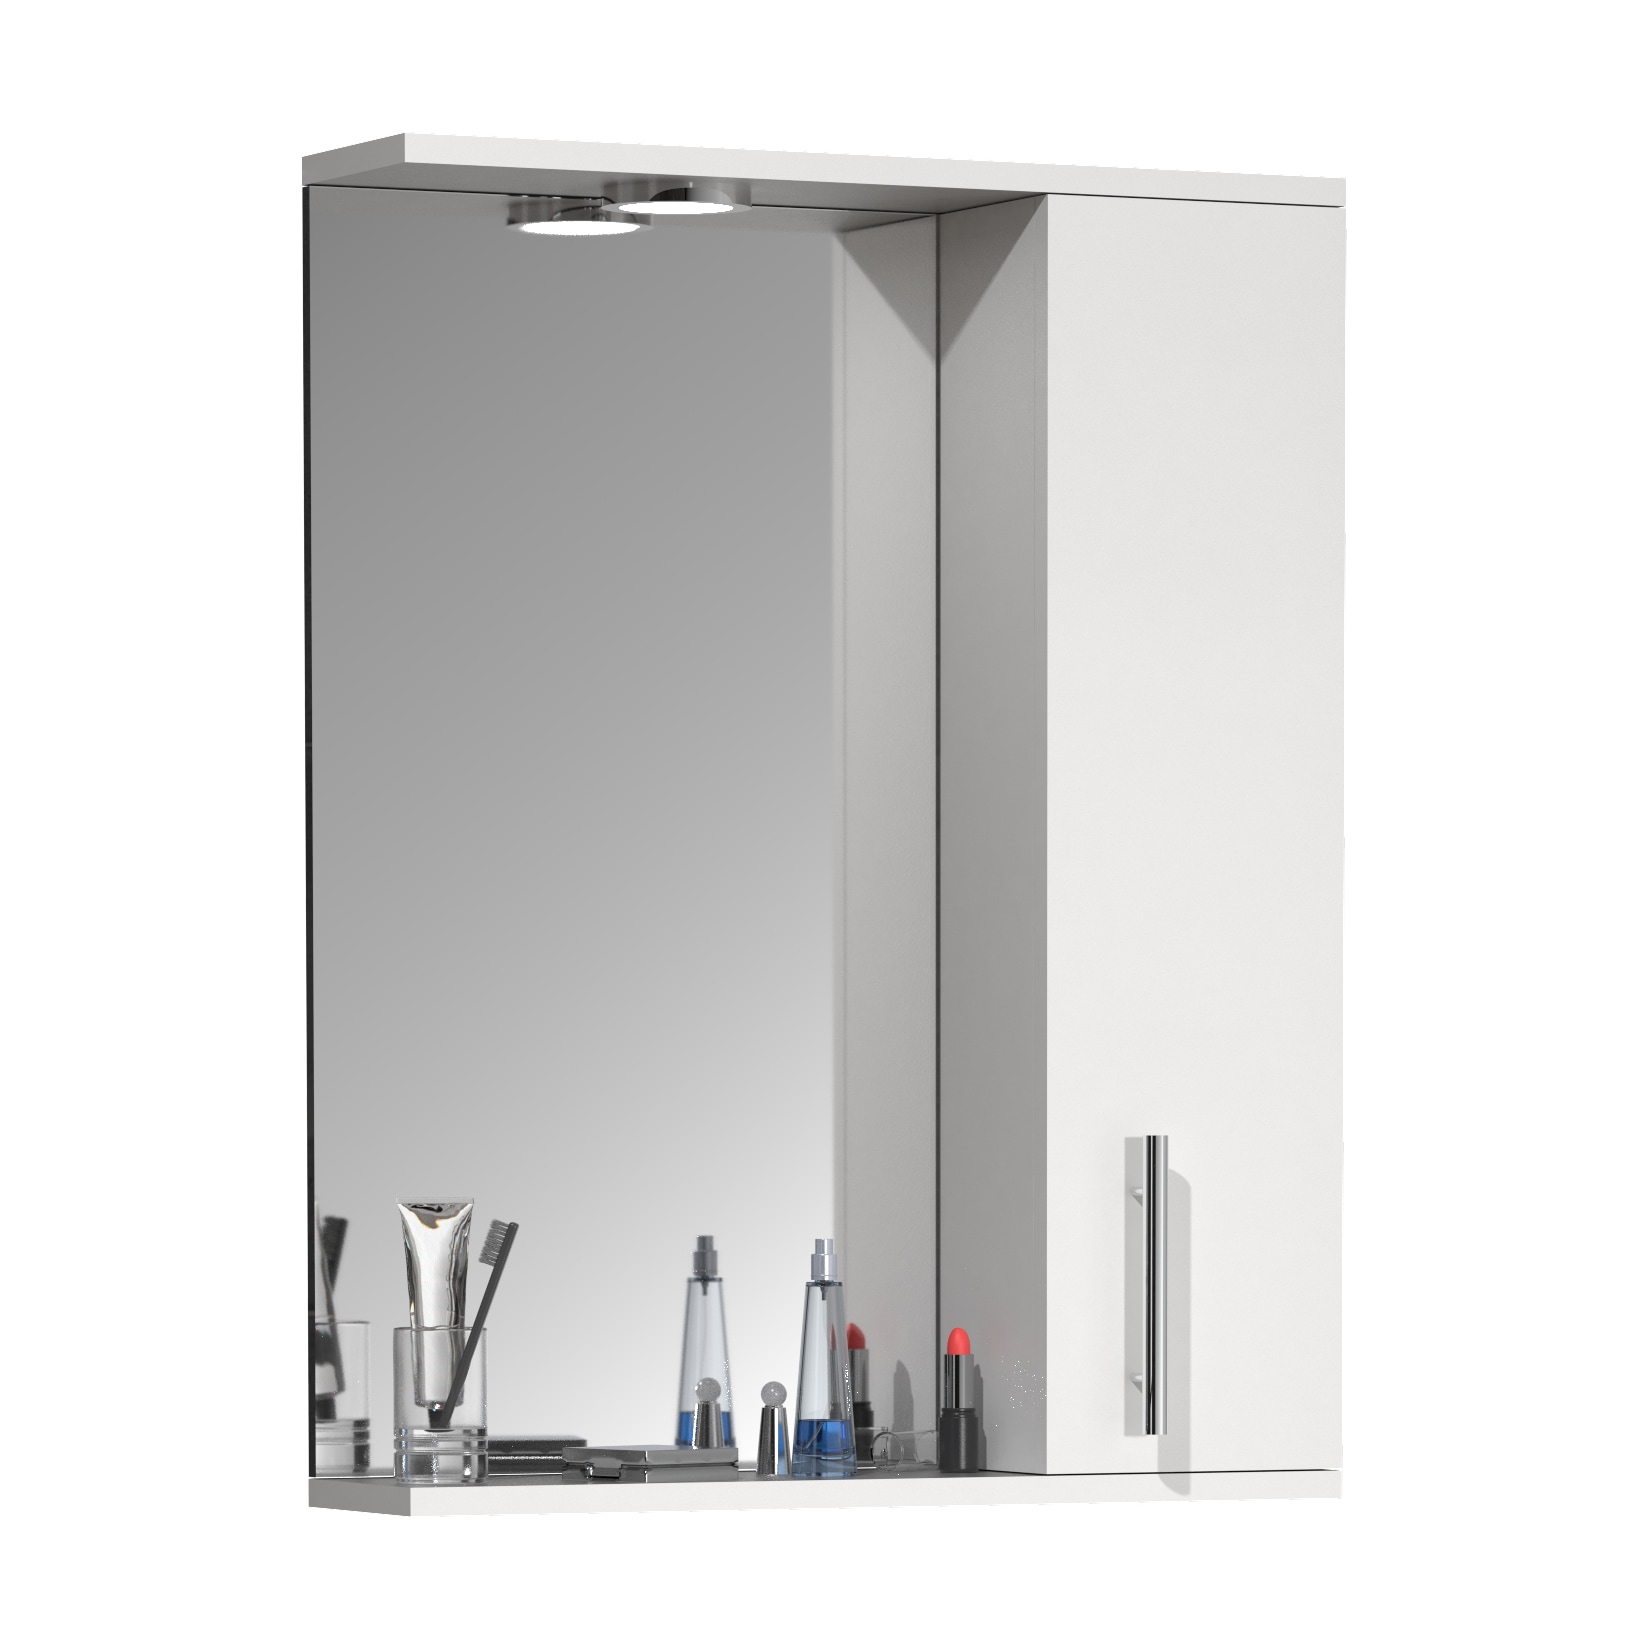 VCM Badspiegel Wandspiegel 55 cm Hängespiegel Spiegelschrank Badezimmer Drehtür Beleuchtung Lisalo L